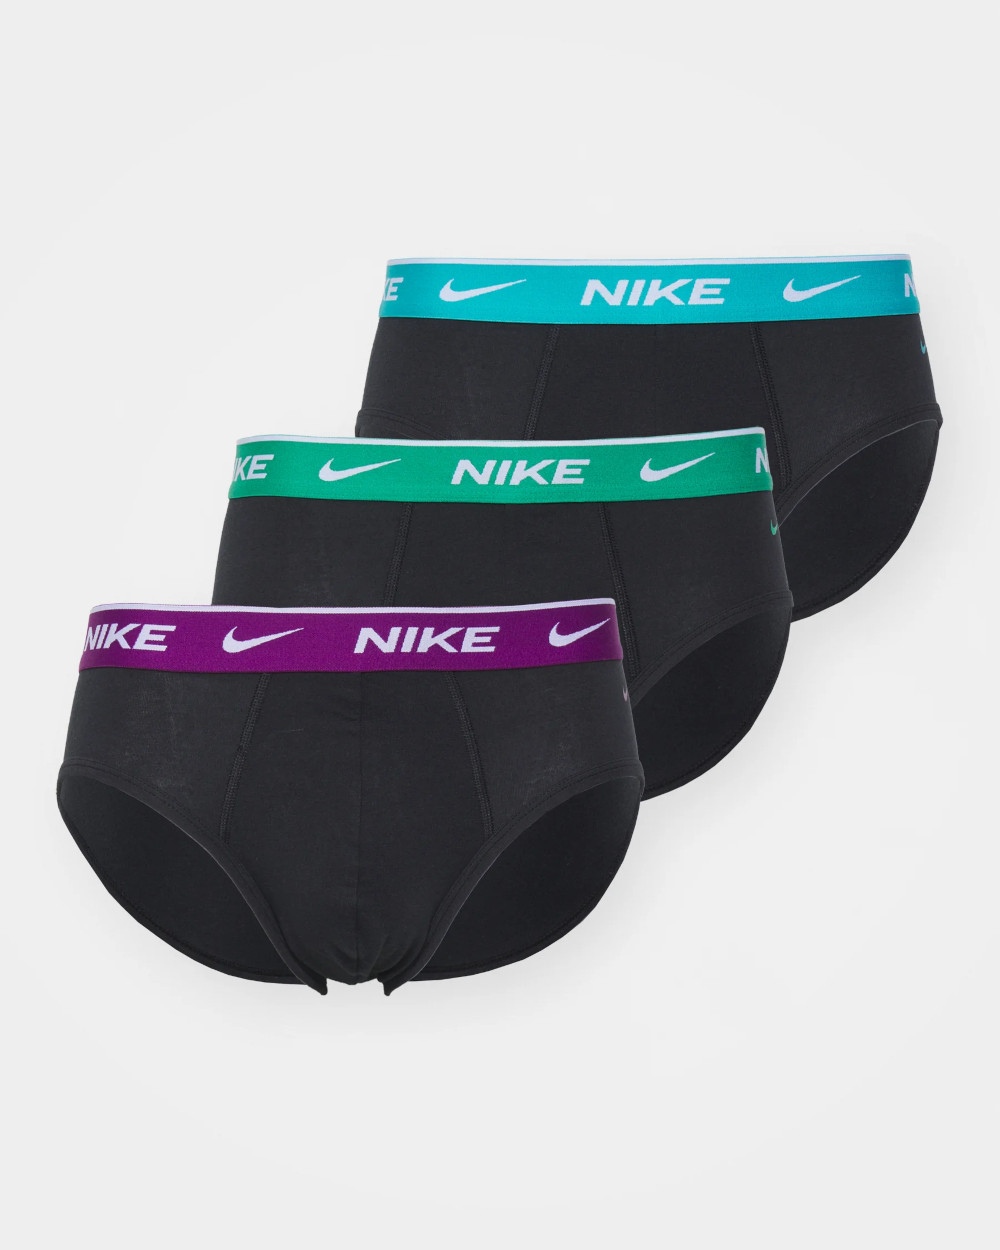  Intimo slip mutande culotte UOMO Nike Underwear BRIEF Graphic 3 PACK Slip EWQ